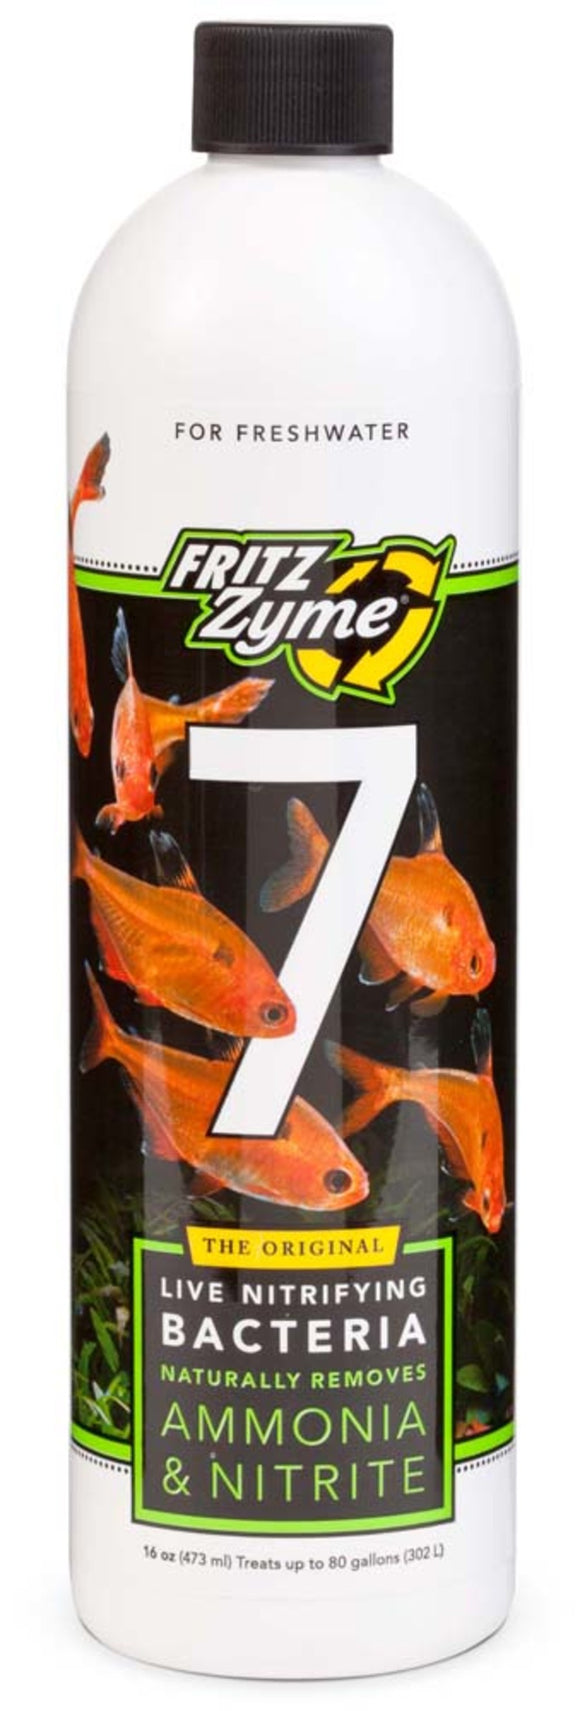 FritzZyme 7 Freshwater-16oz